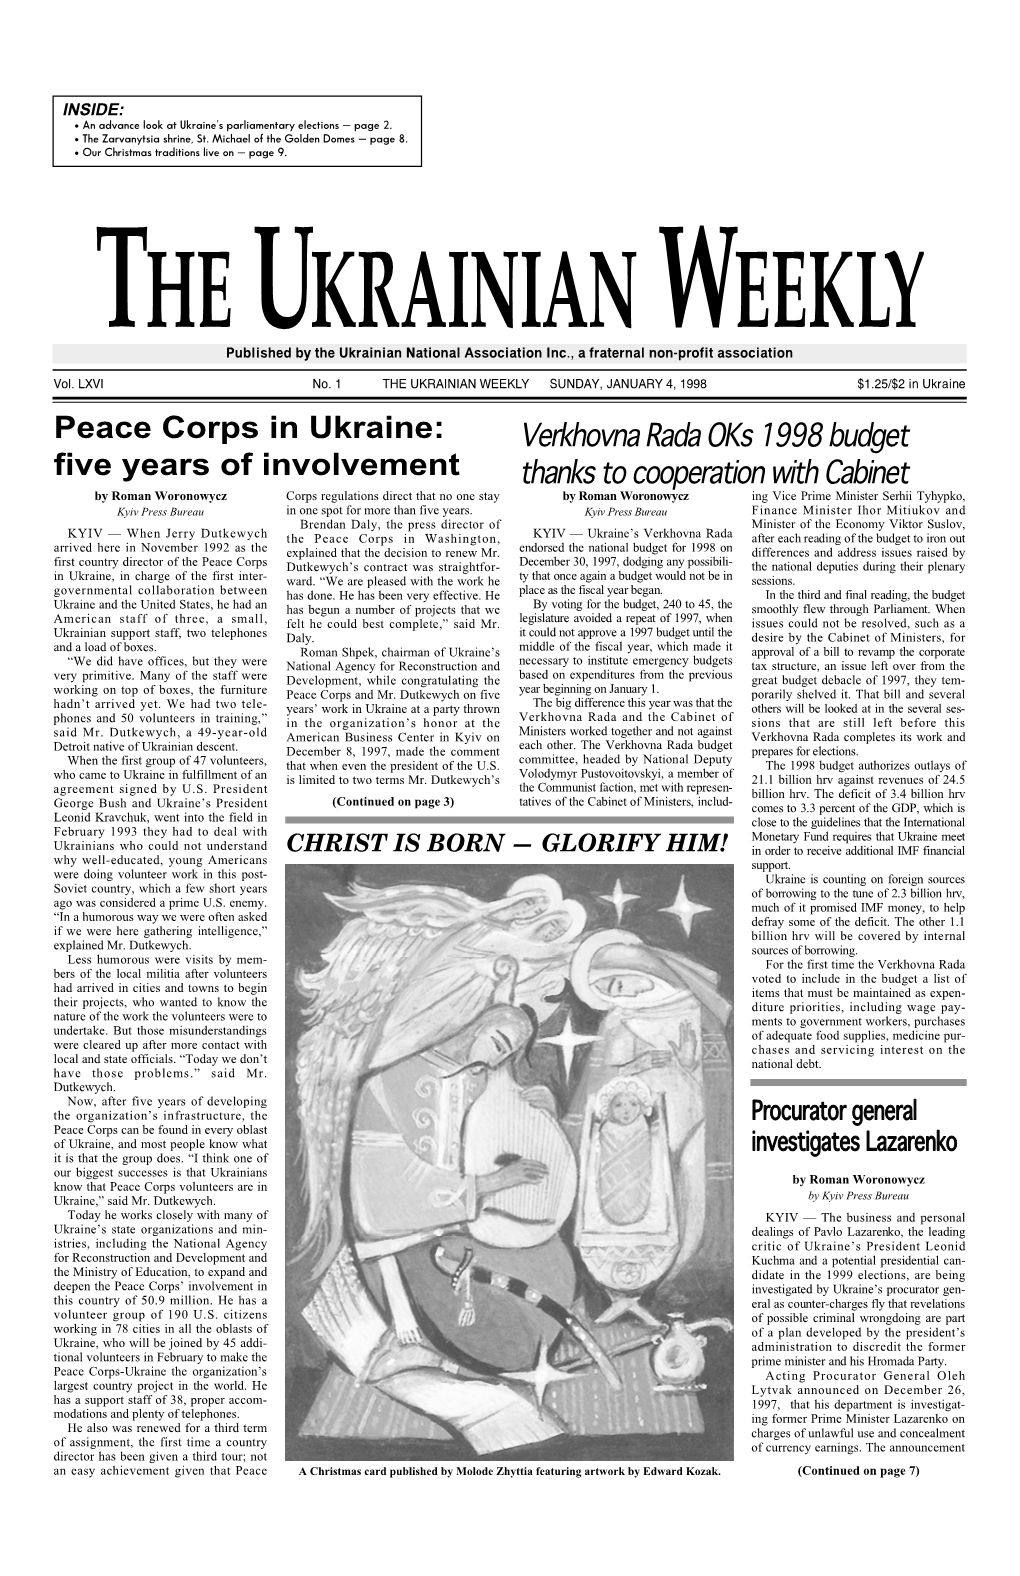 The Ukrainian Weekly 1998, No.1